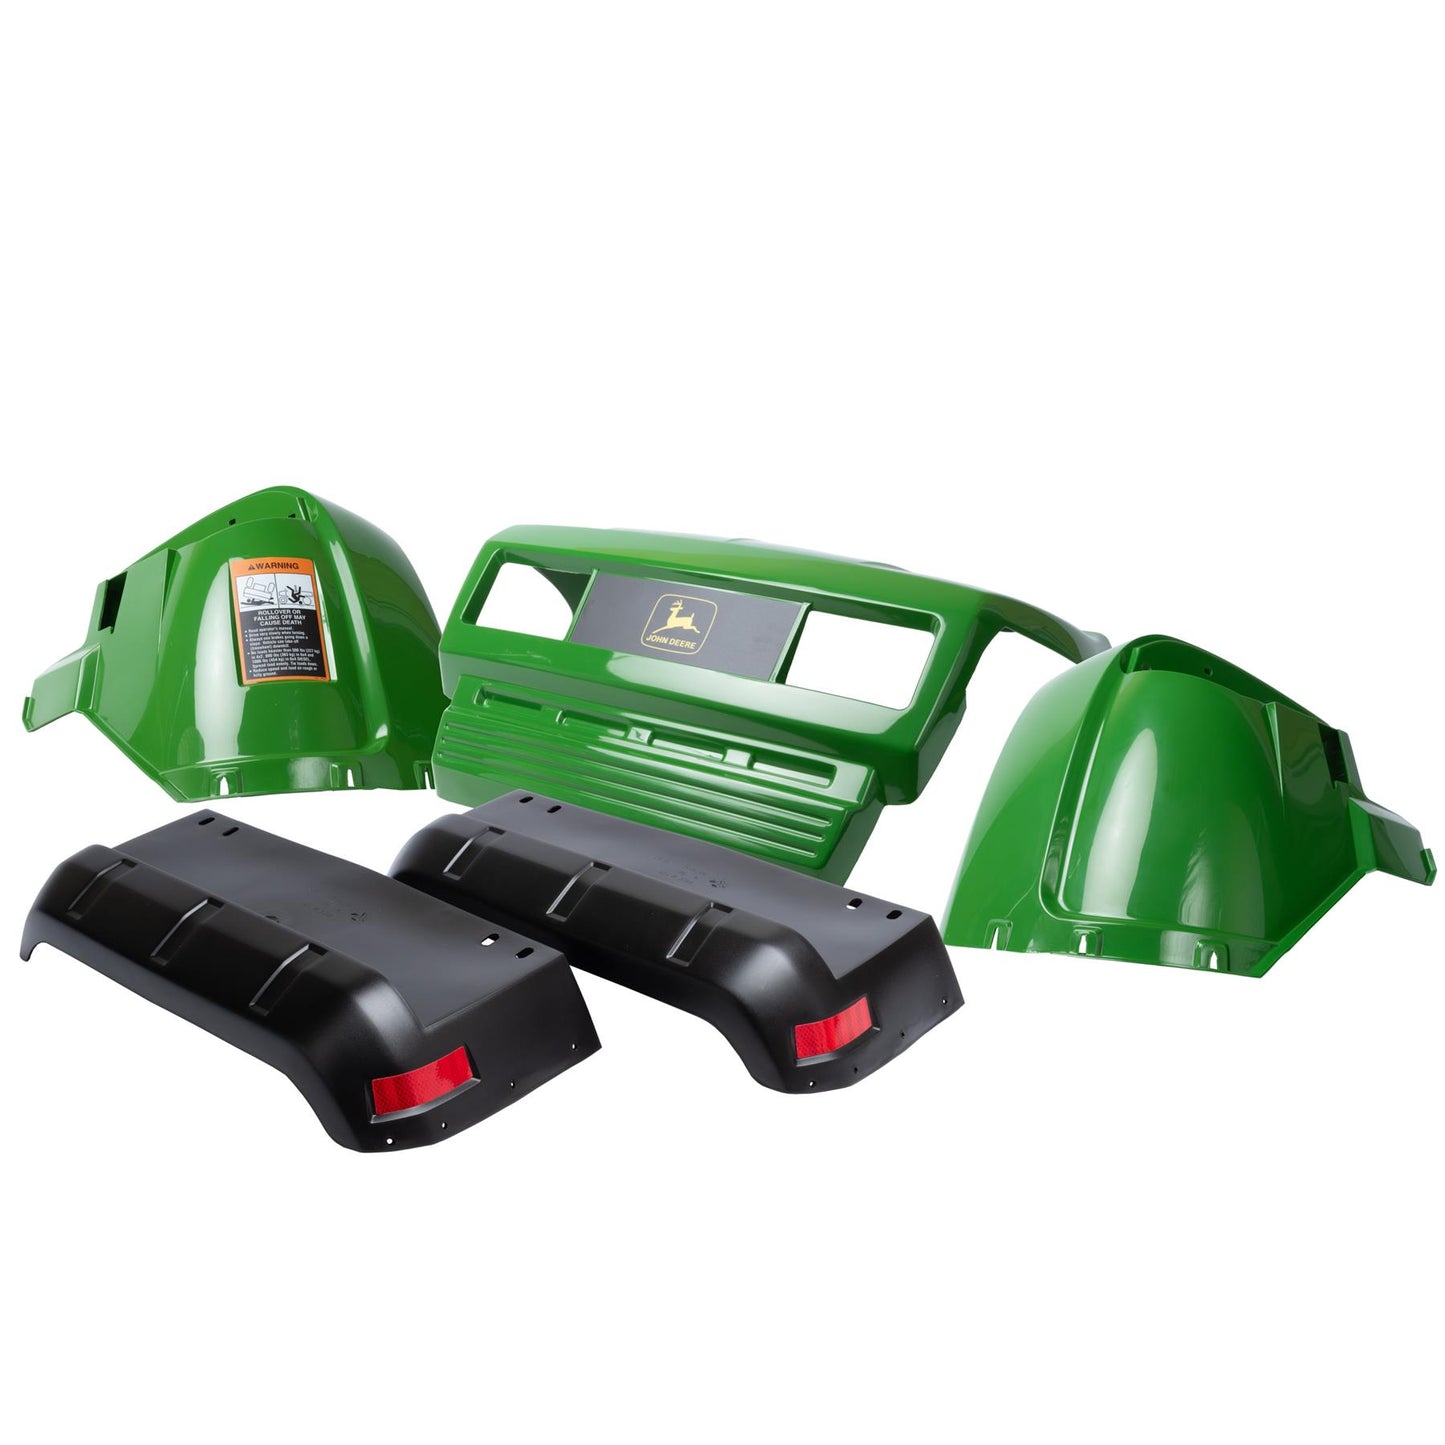 Body Kit - Green - AM119586 AM125669